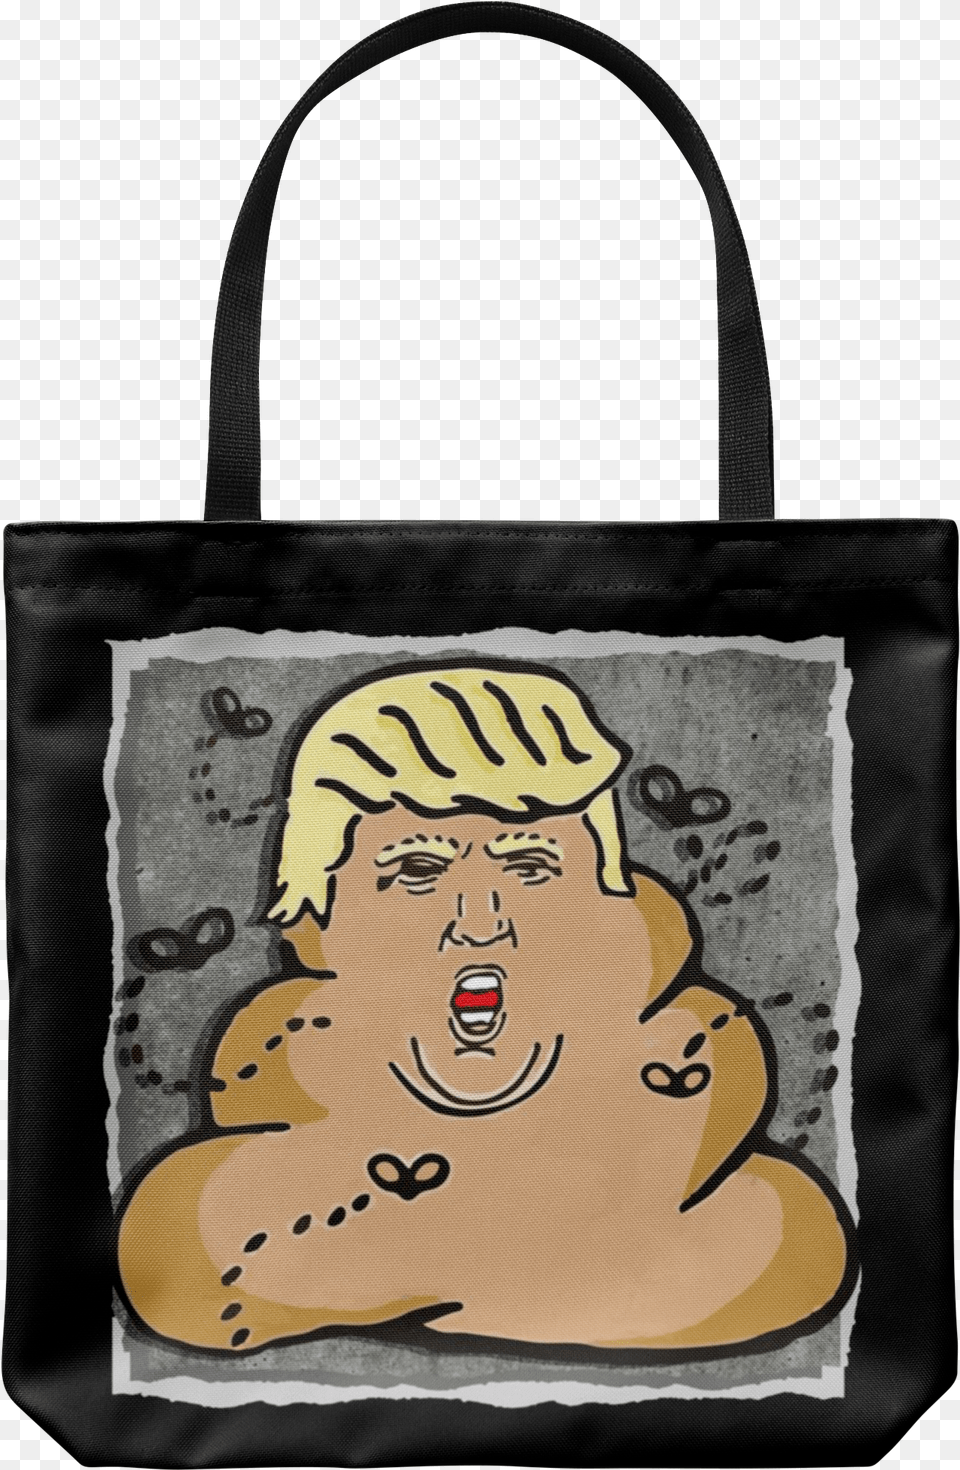 Trump Poop Emojiclass Political Street Art Artists, Accessories, Bag, Handbag, Purse Png Image